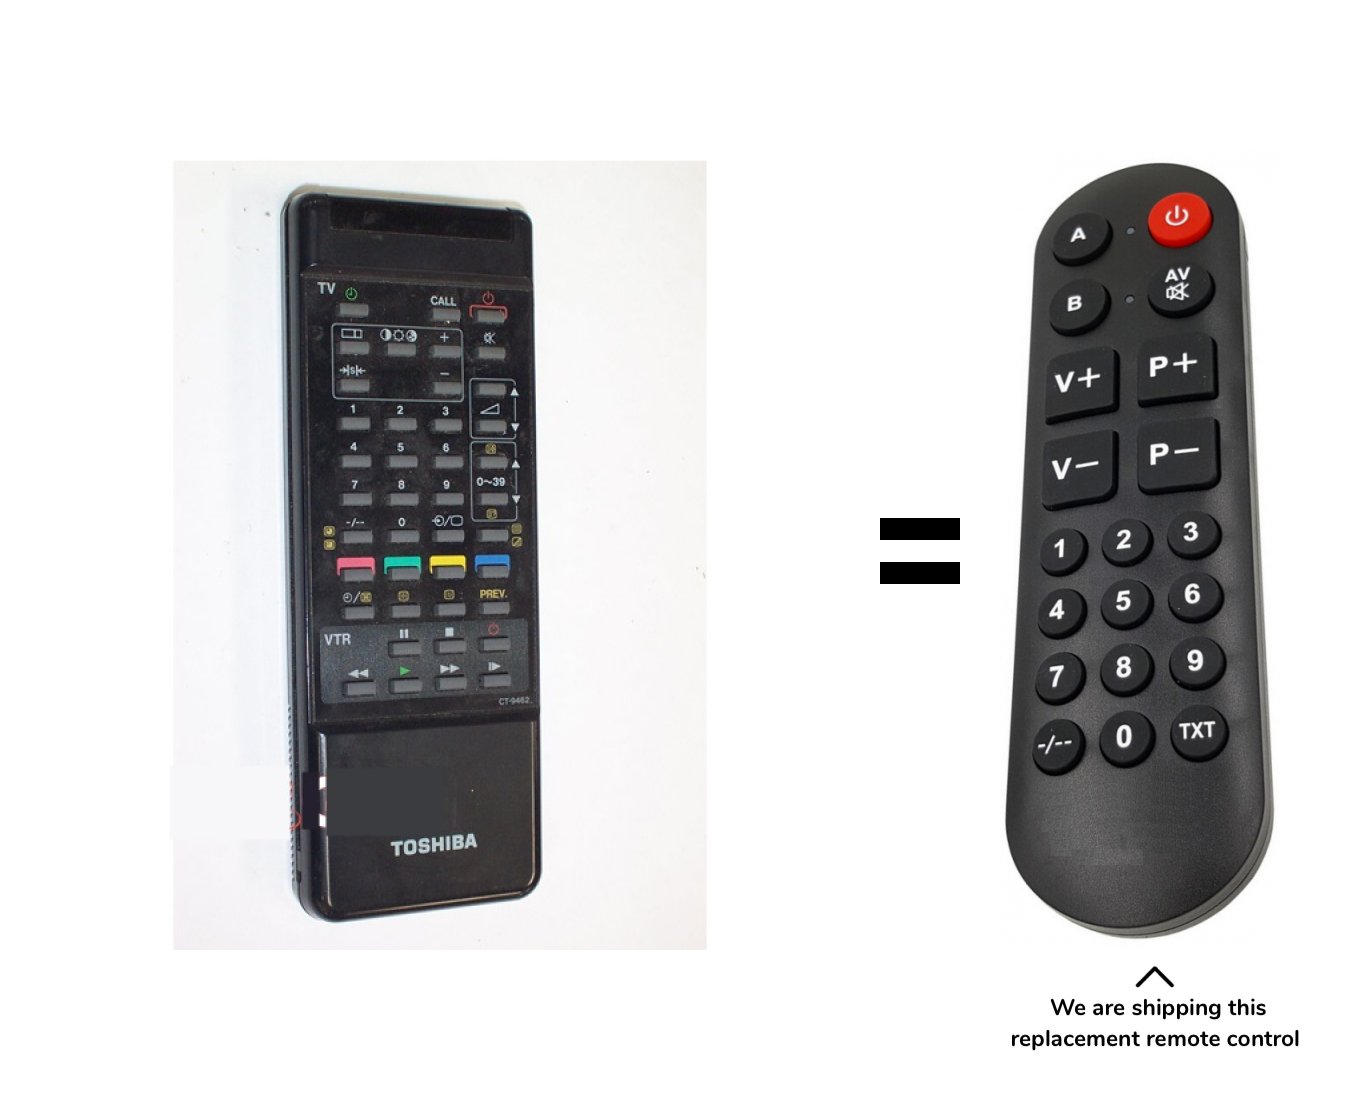 Toshiba 2505TD remote control for seniors